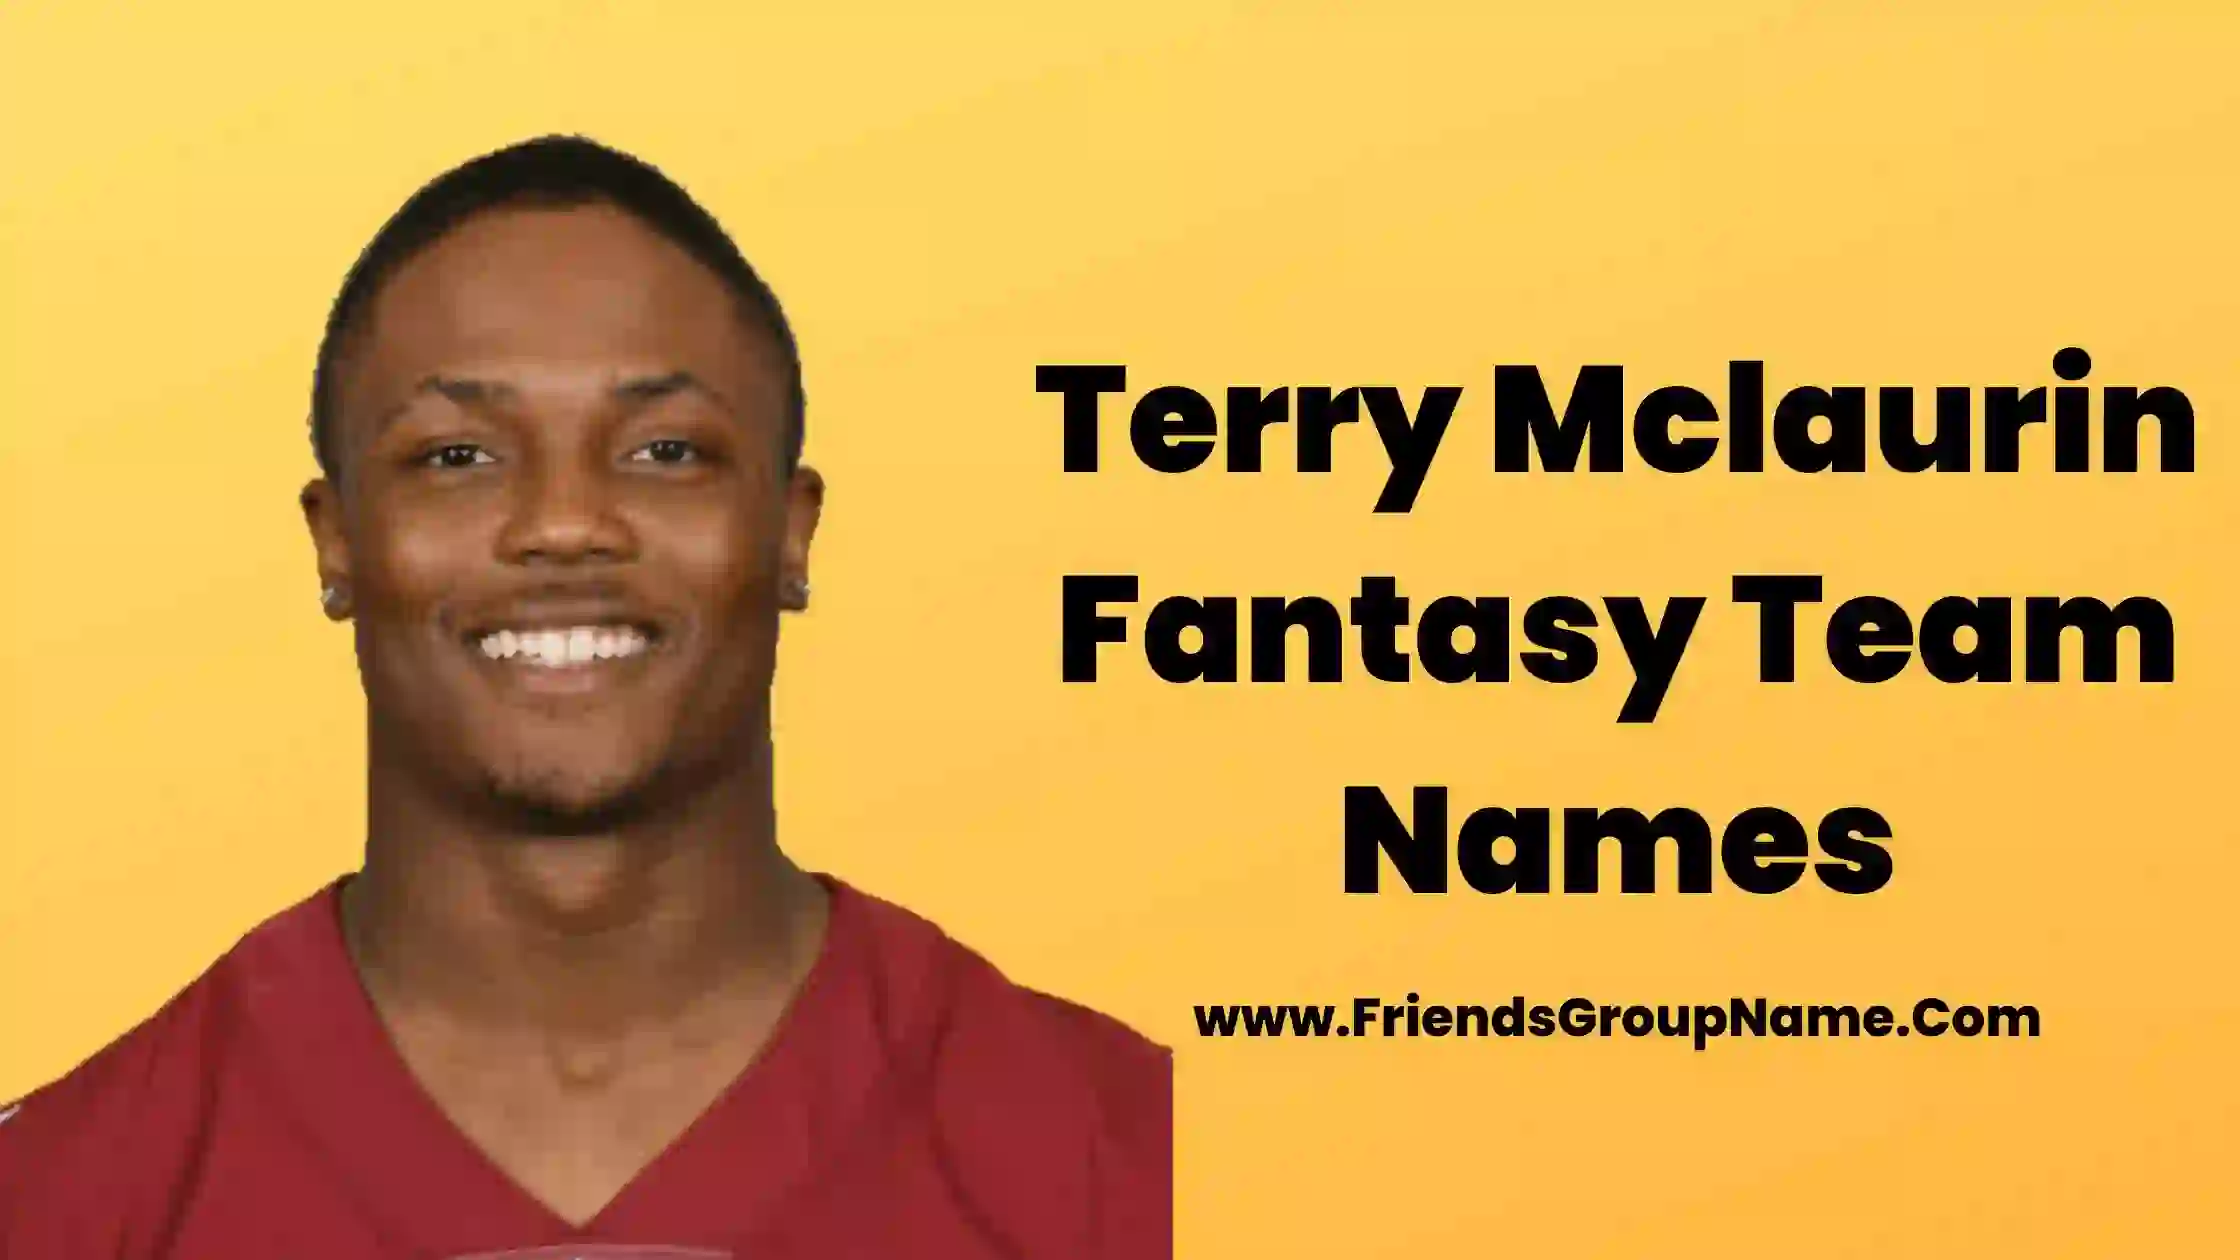 Terry Mclaurin Fantasy Team Names